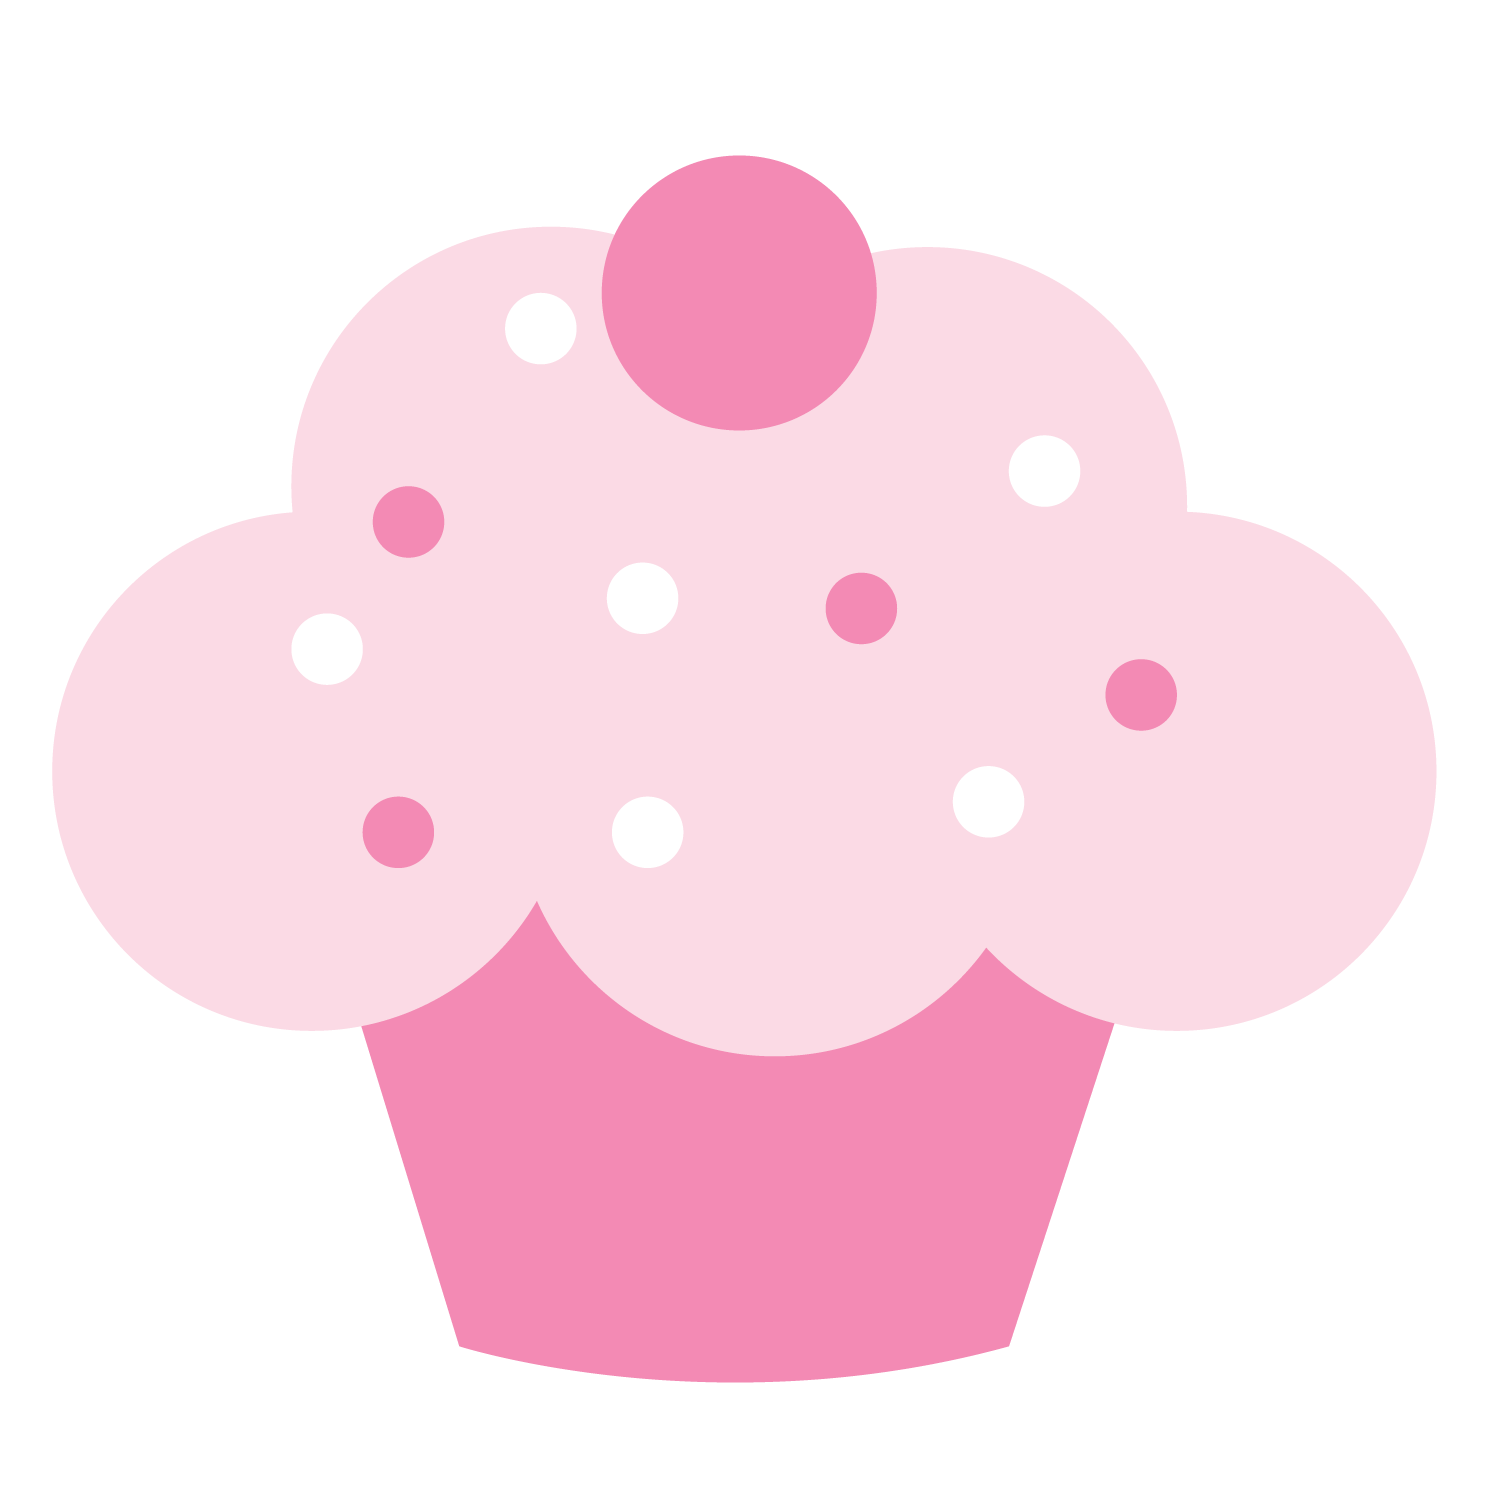 cupcake 2 2